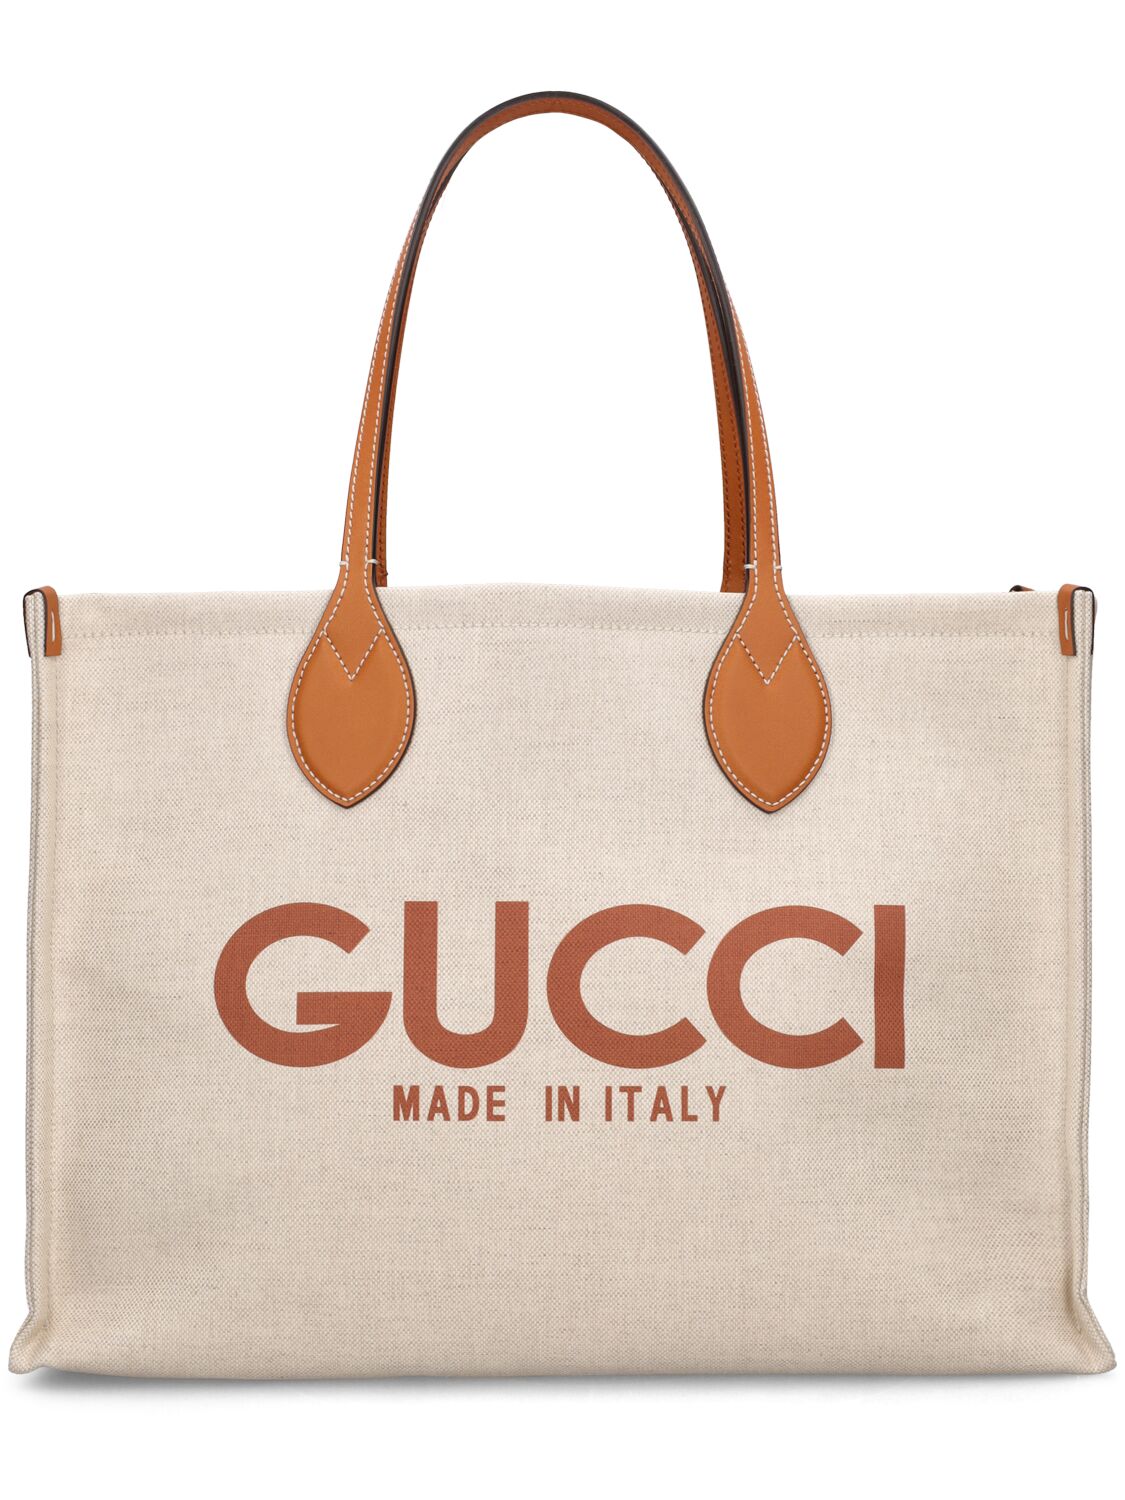 Image of Gucci Canvas Tote Bag